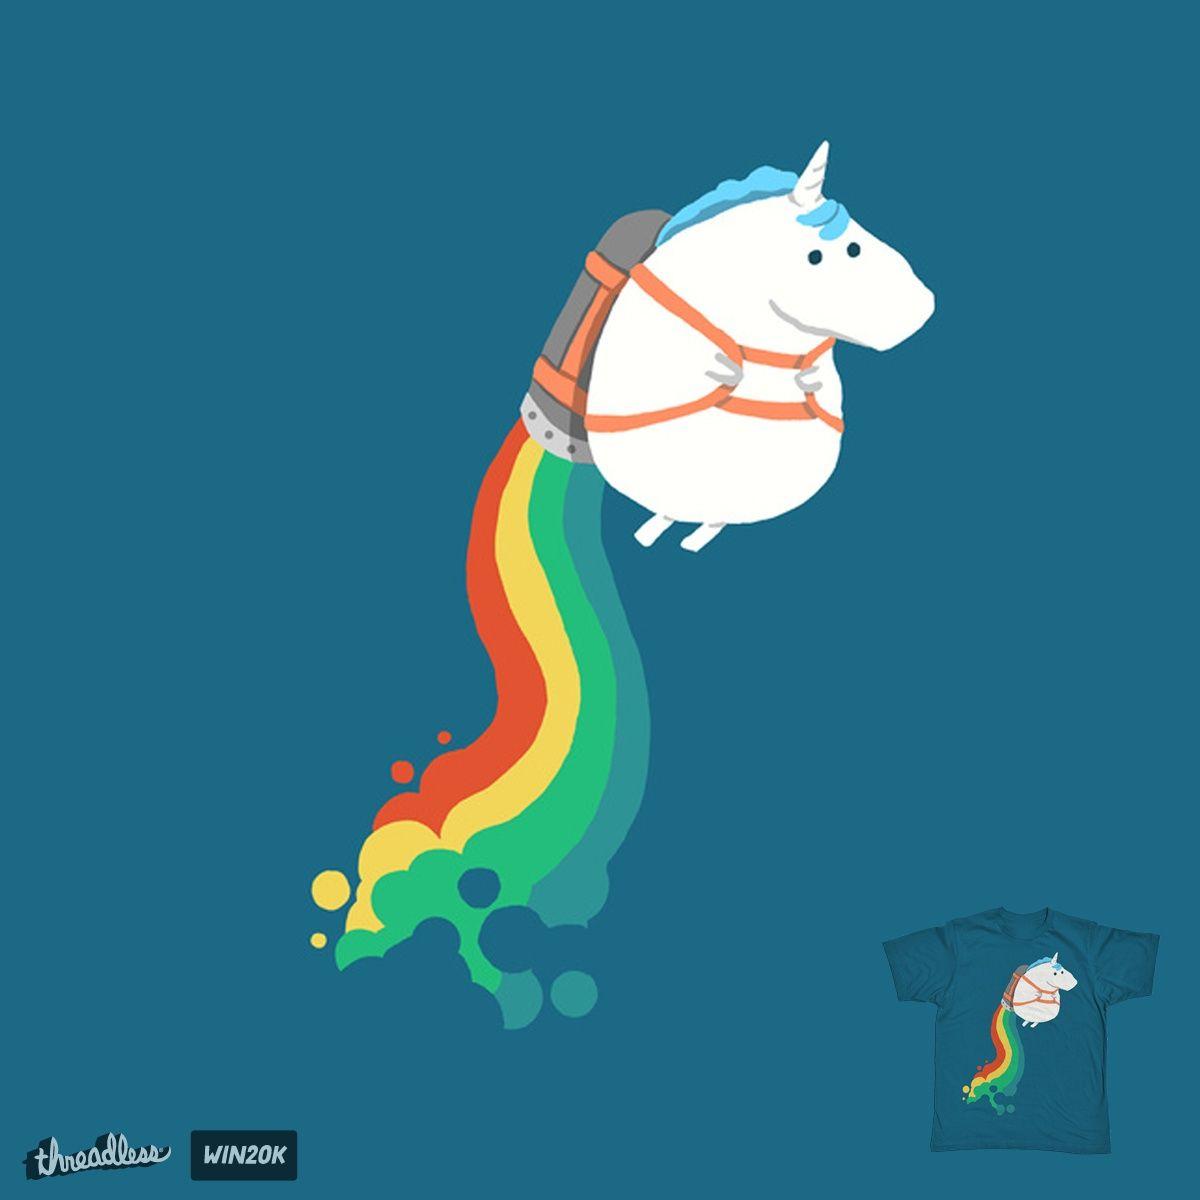 Fat unicorn on rainbow jetpack by radiomode on Threadless